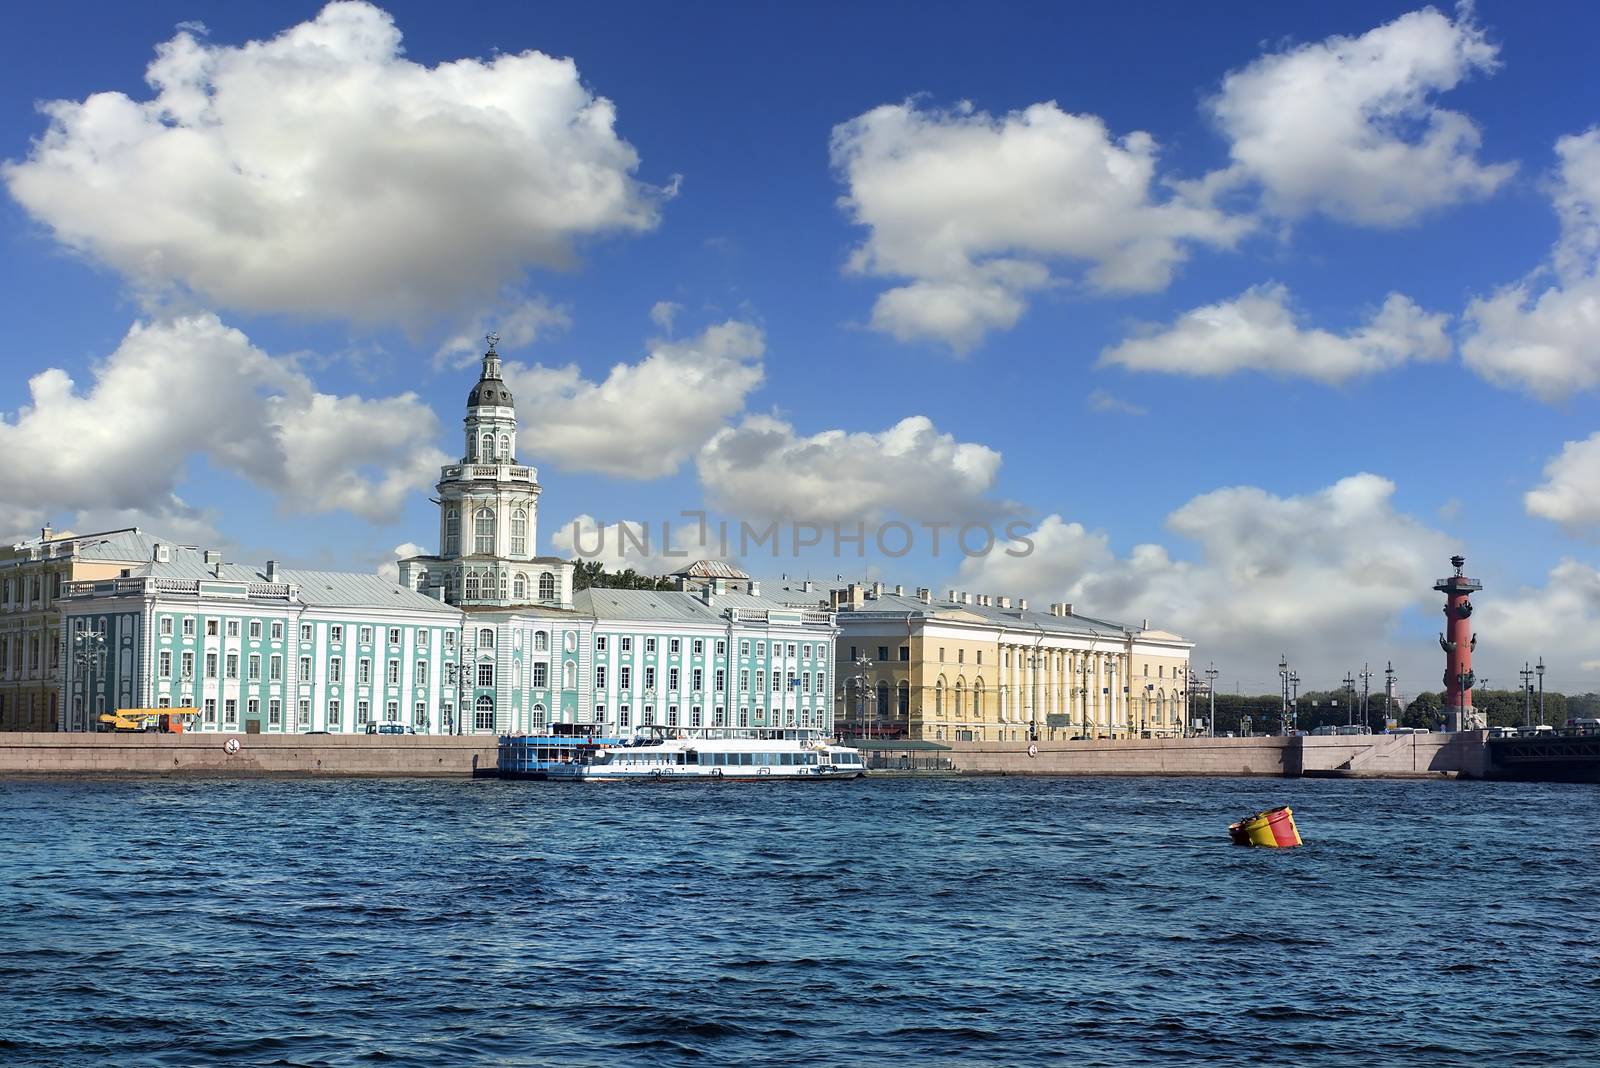 Kunstkammer museum in Saint Petersburg, Russia by irisphoto4